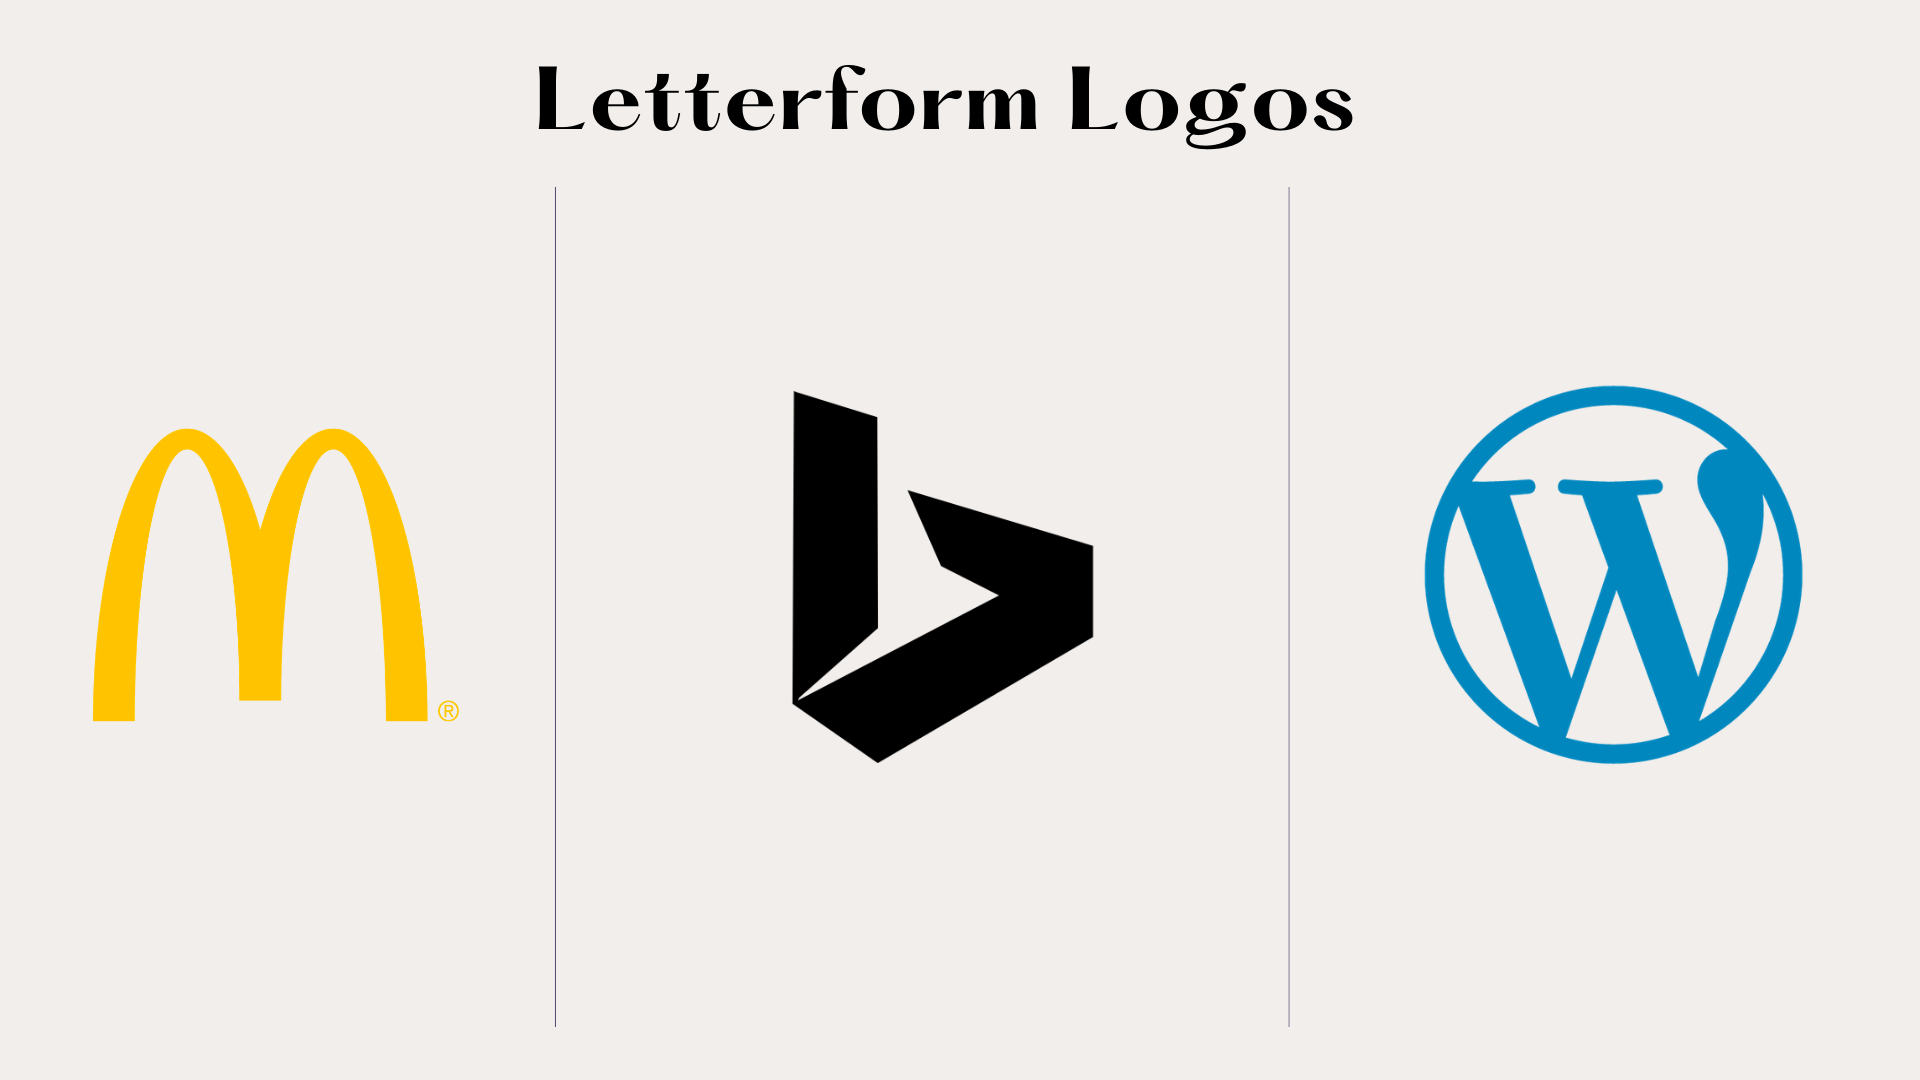 Letterform logotype